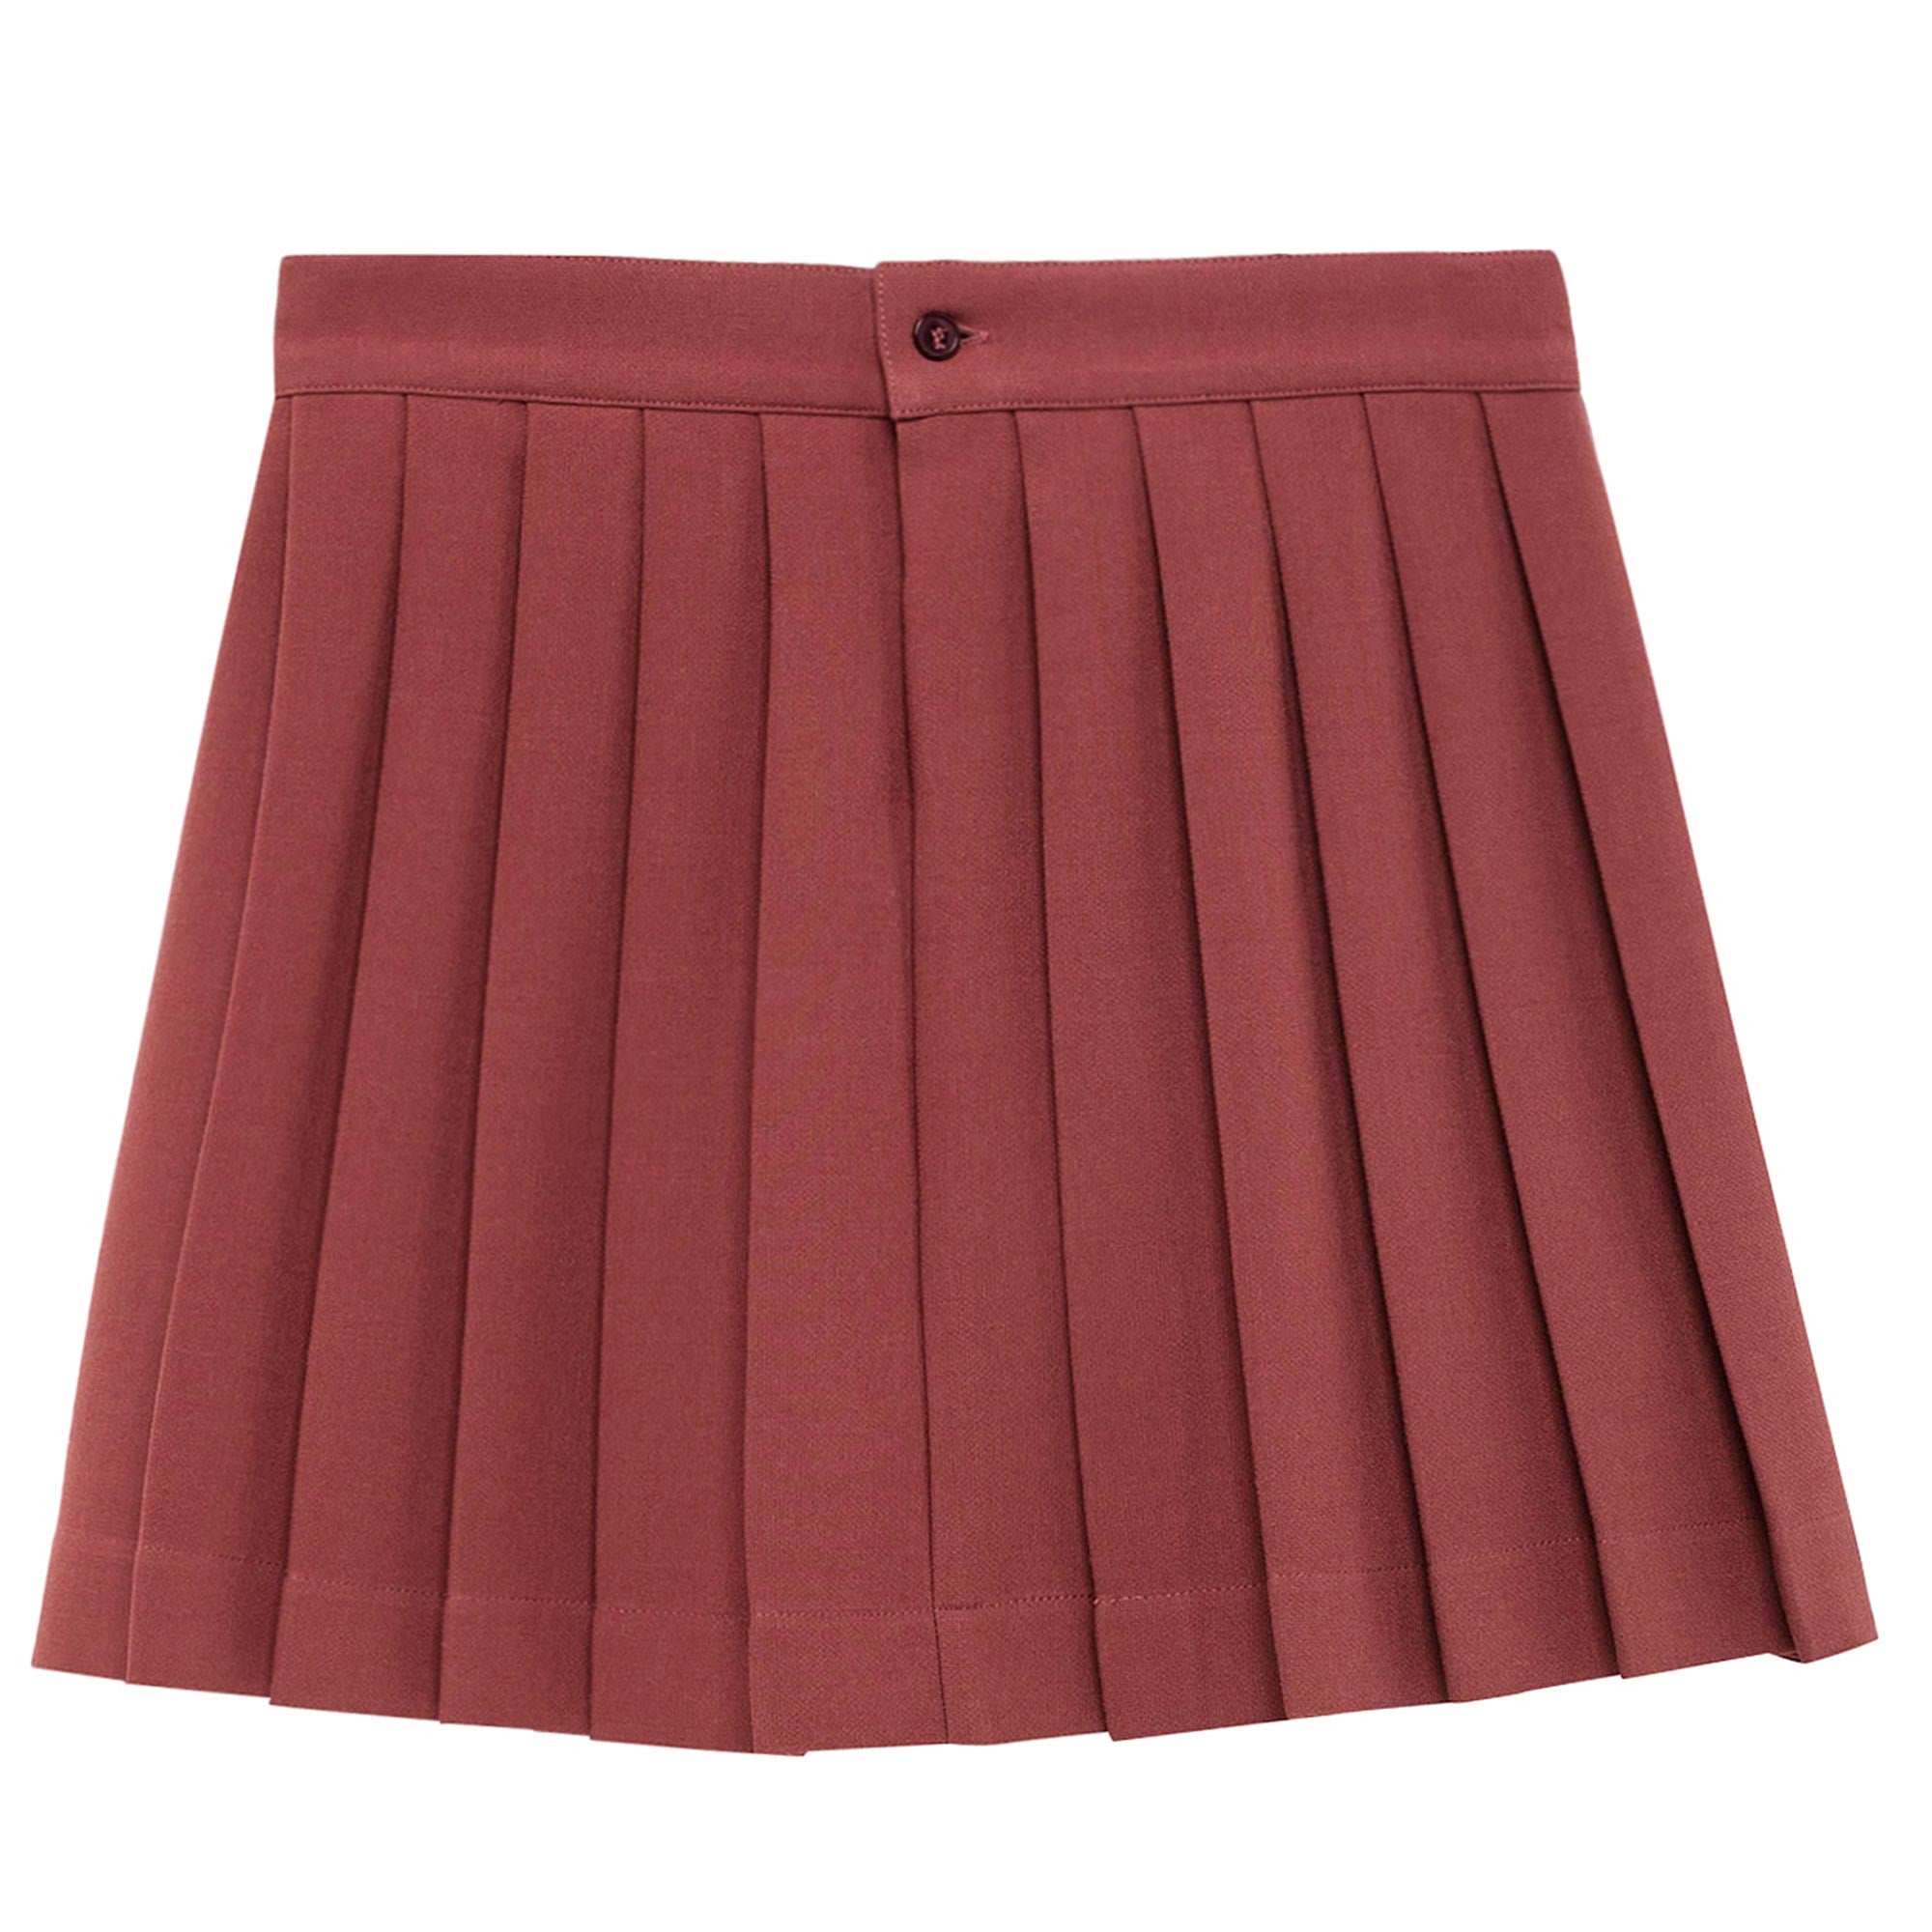 Girls Red Turkey Skirt